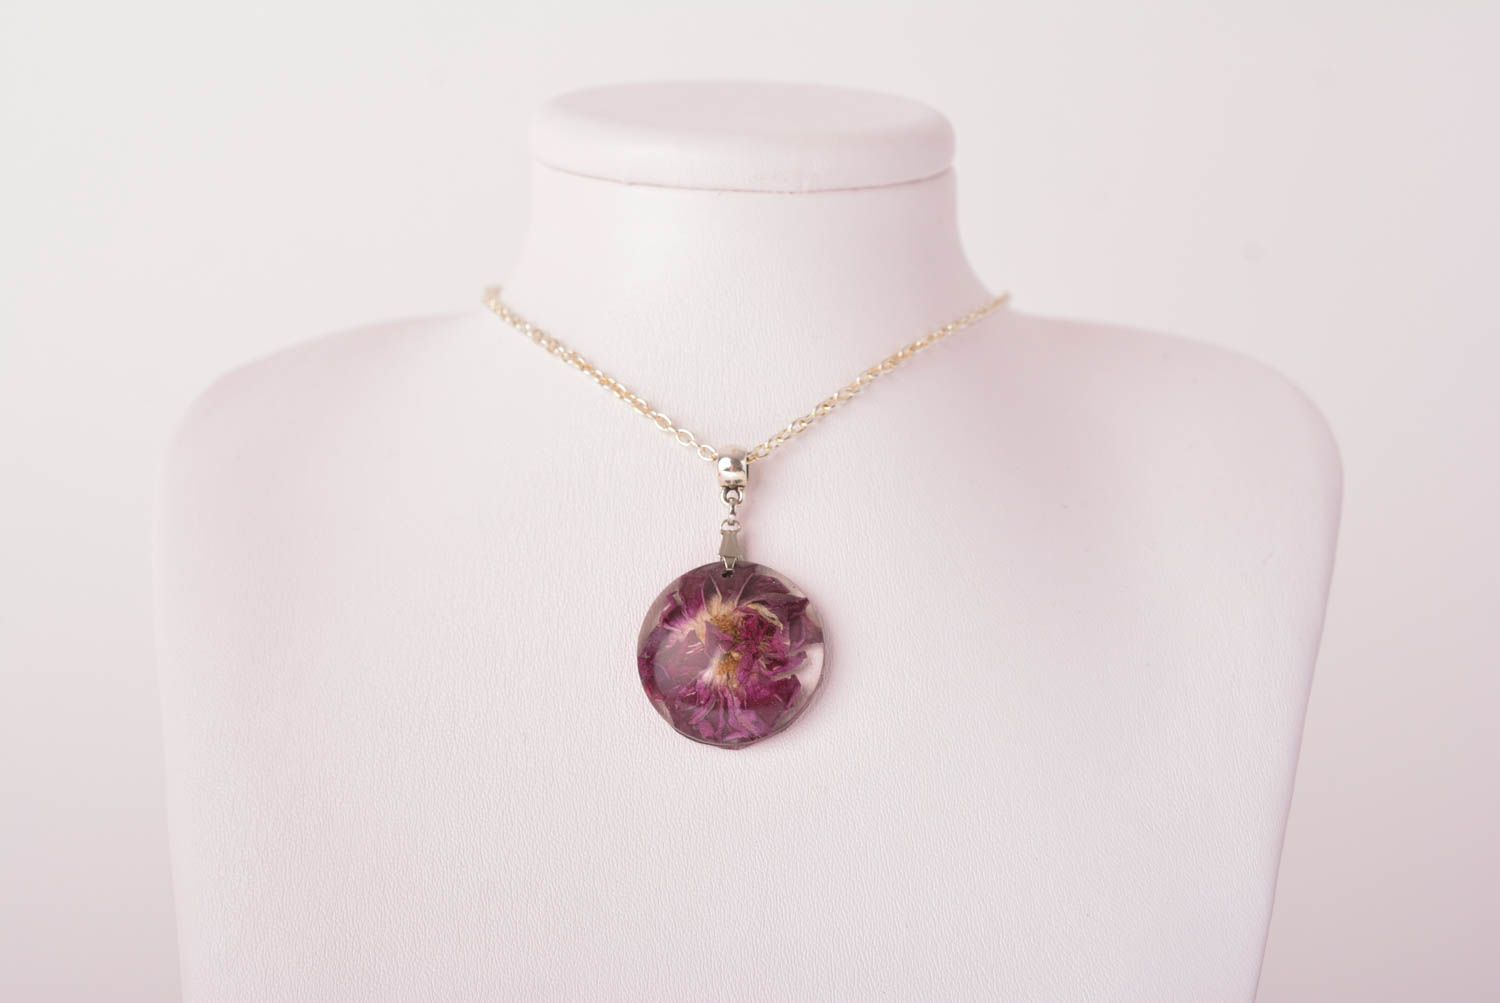 Handmade pendant unusual pendant for women gift ideas designer jewelry photo 3